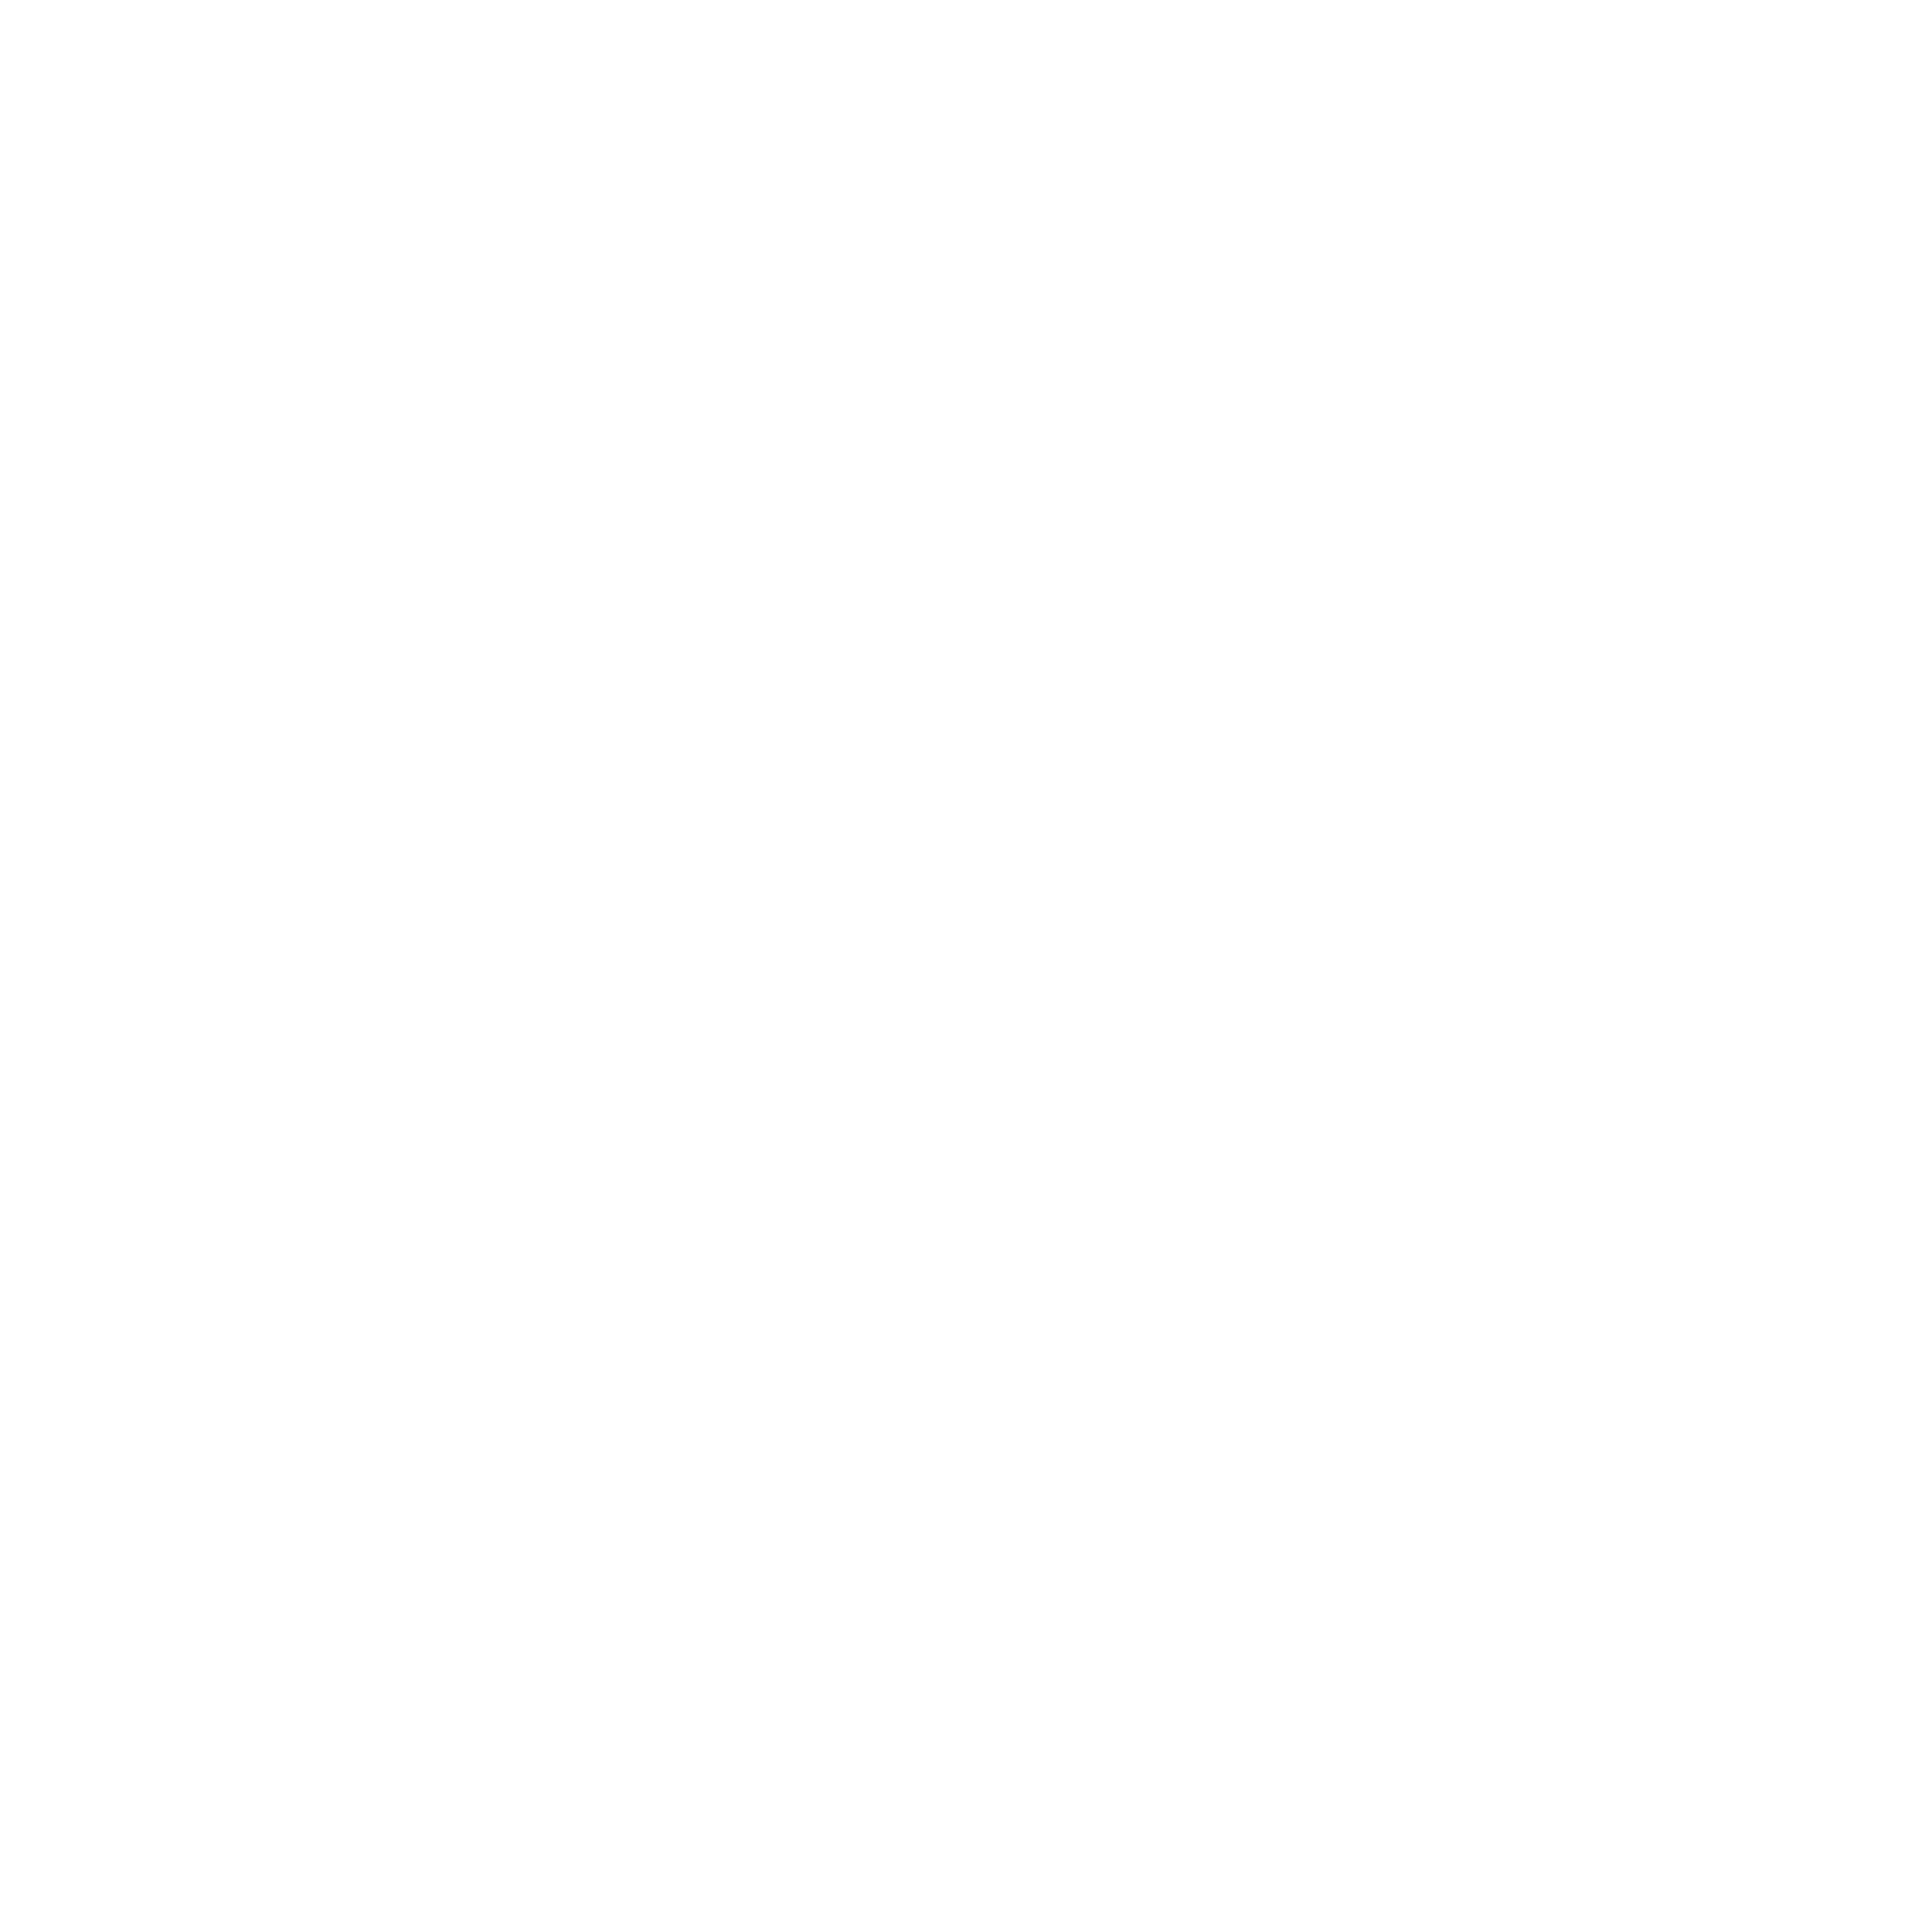 CHARLES RIVER SWIMMING CLUB